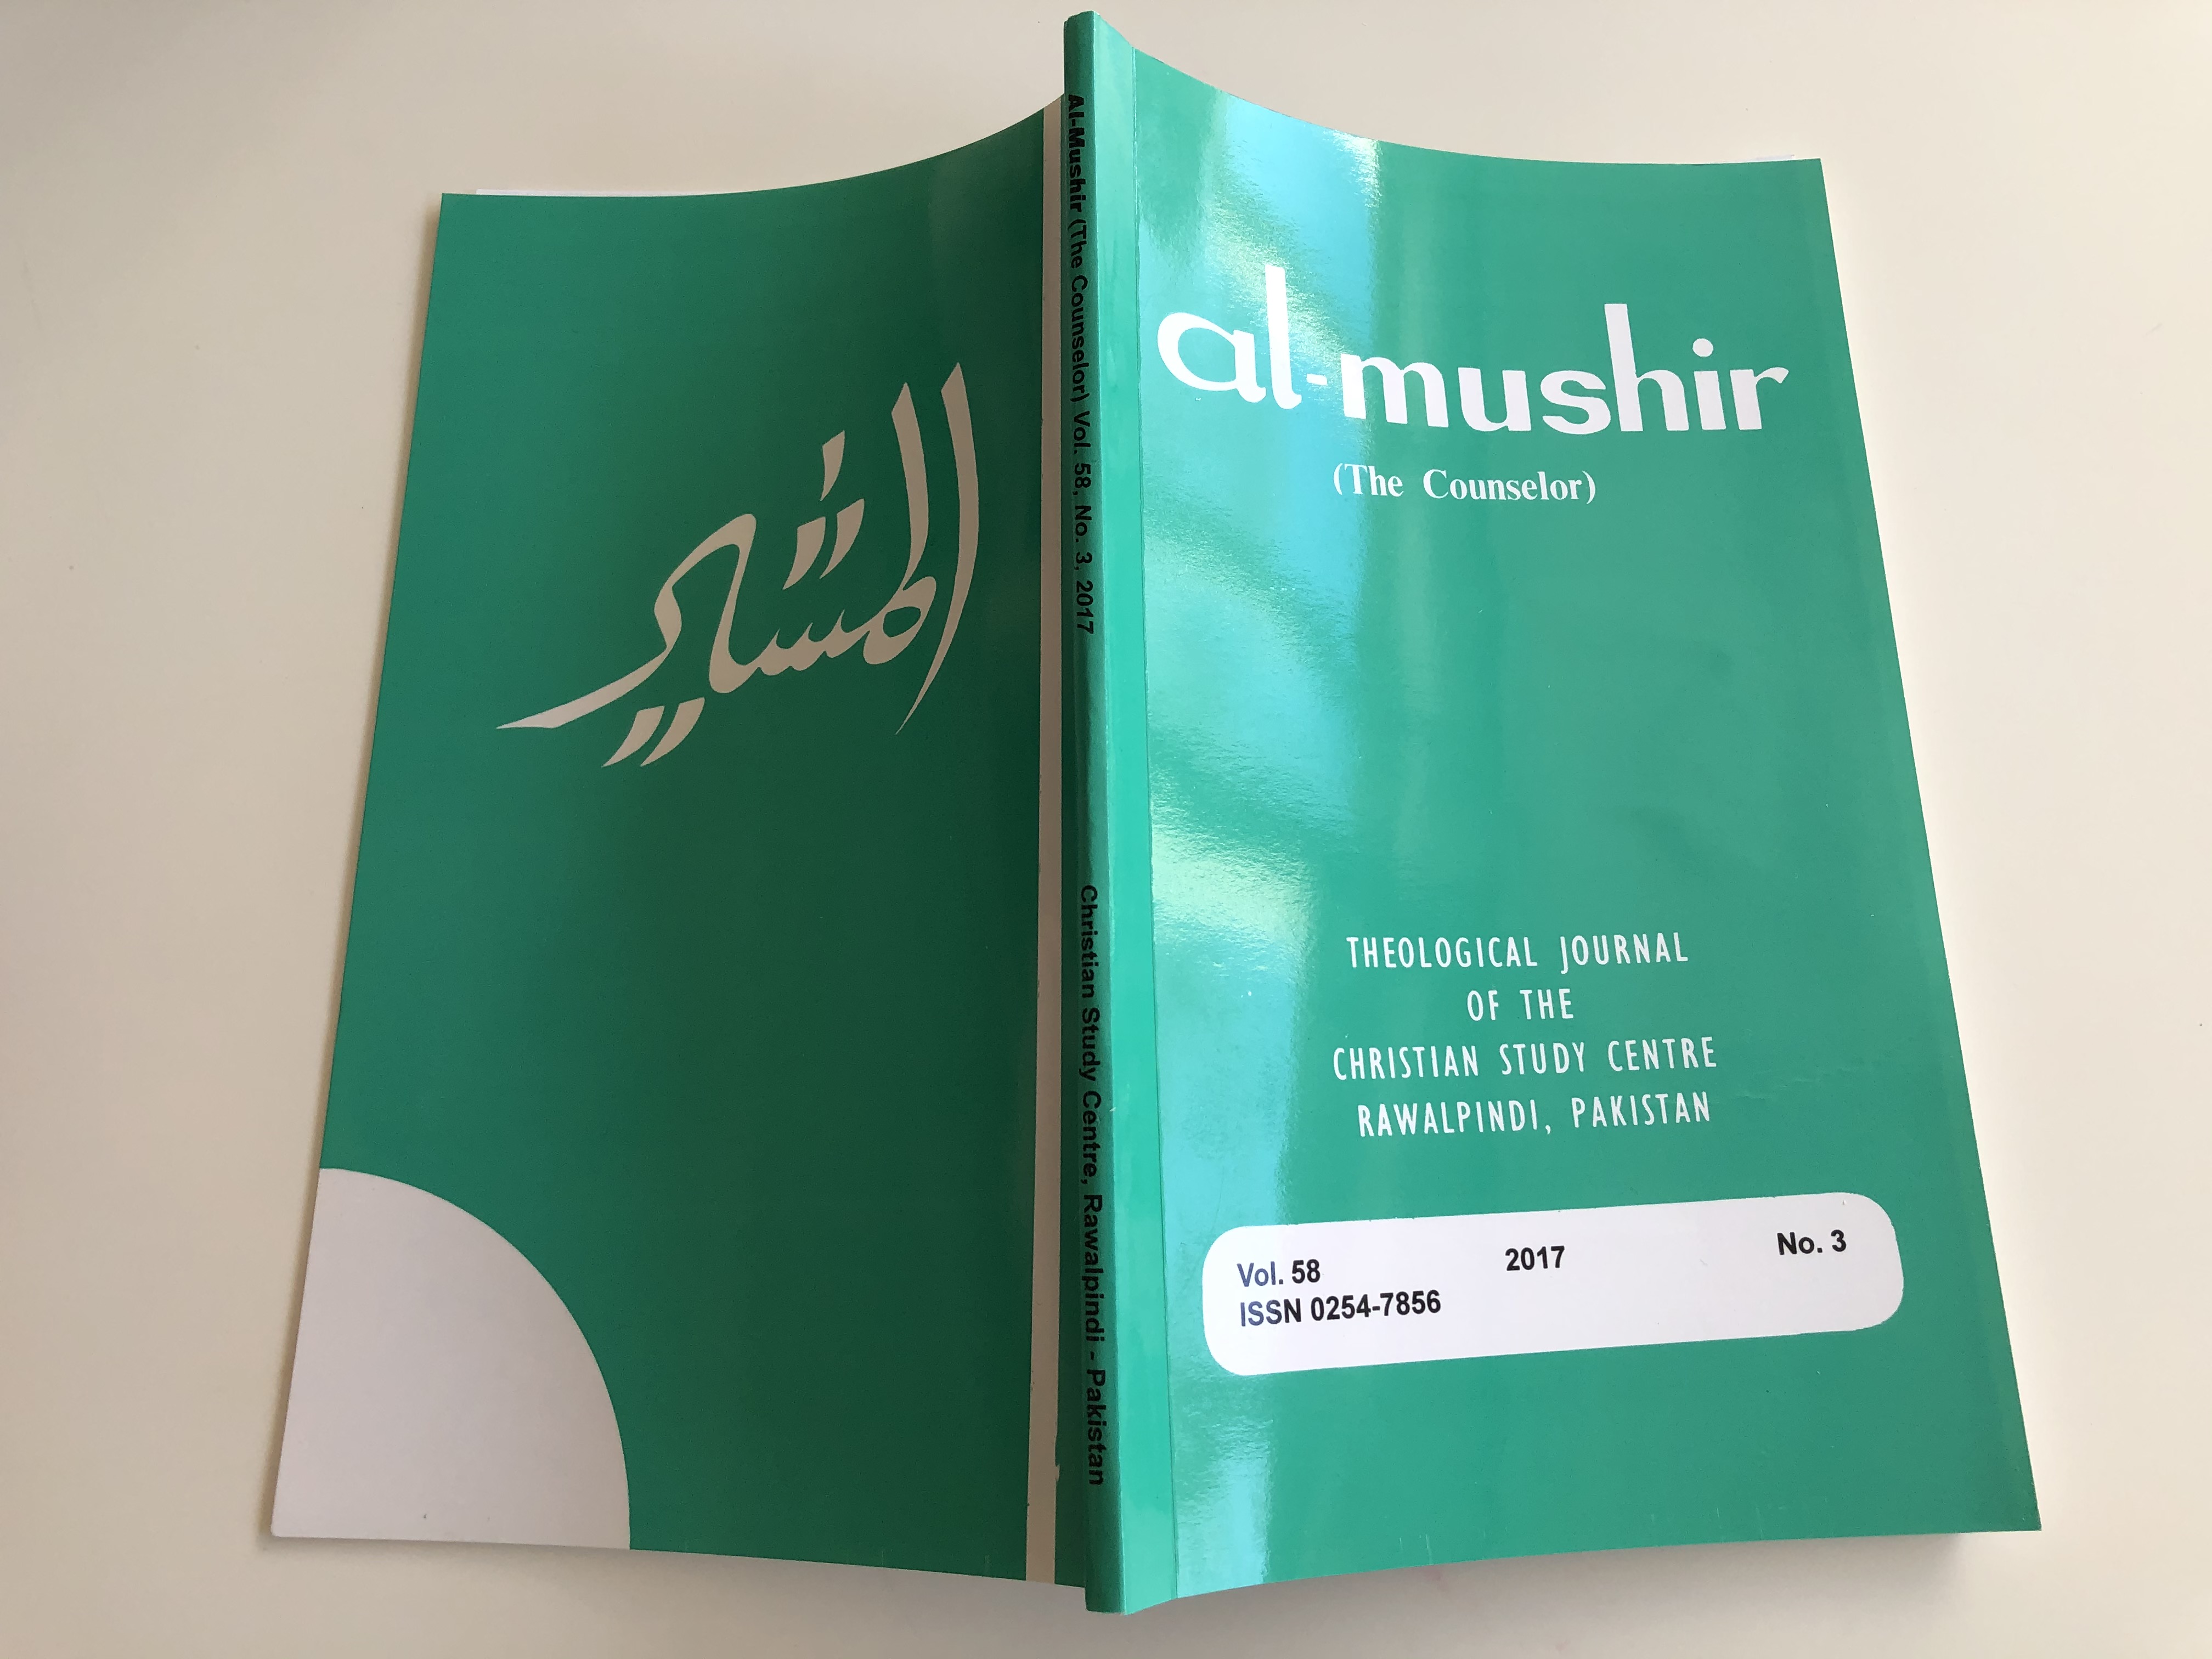 al-mushir-the-counselor-volume-58-no.-3-13.jpg